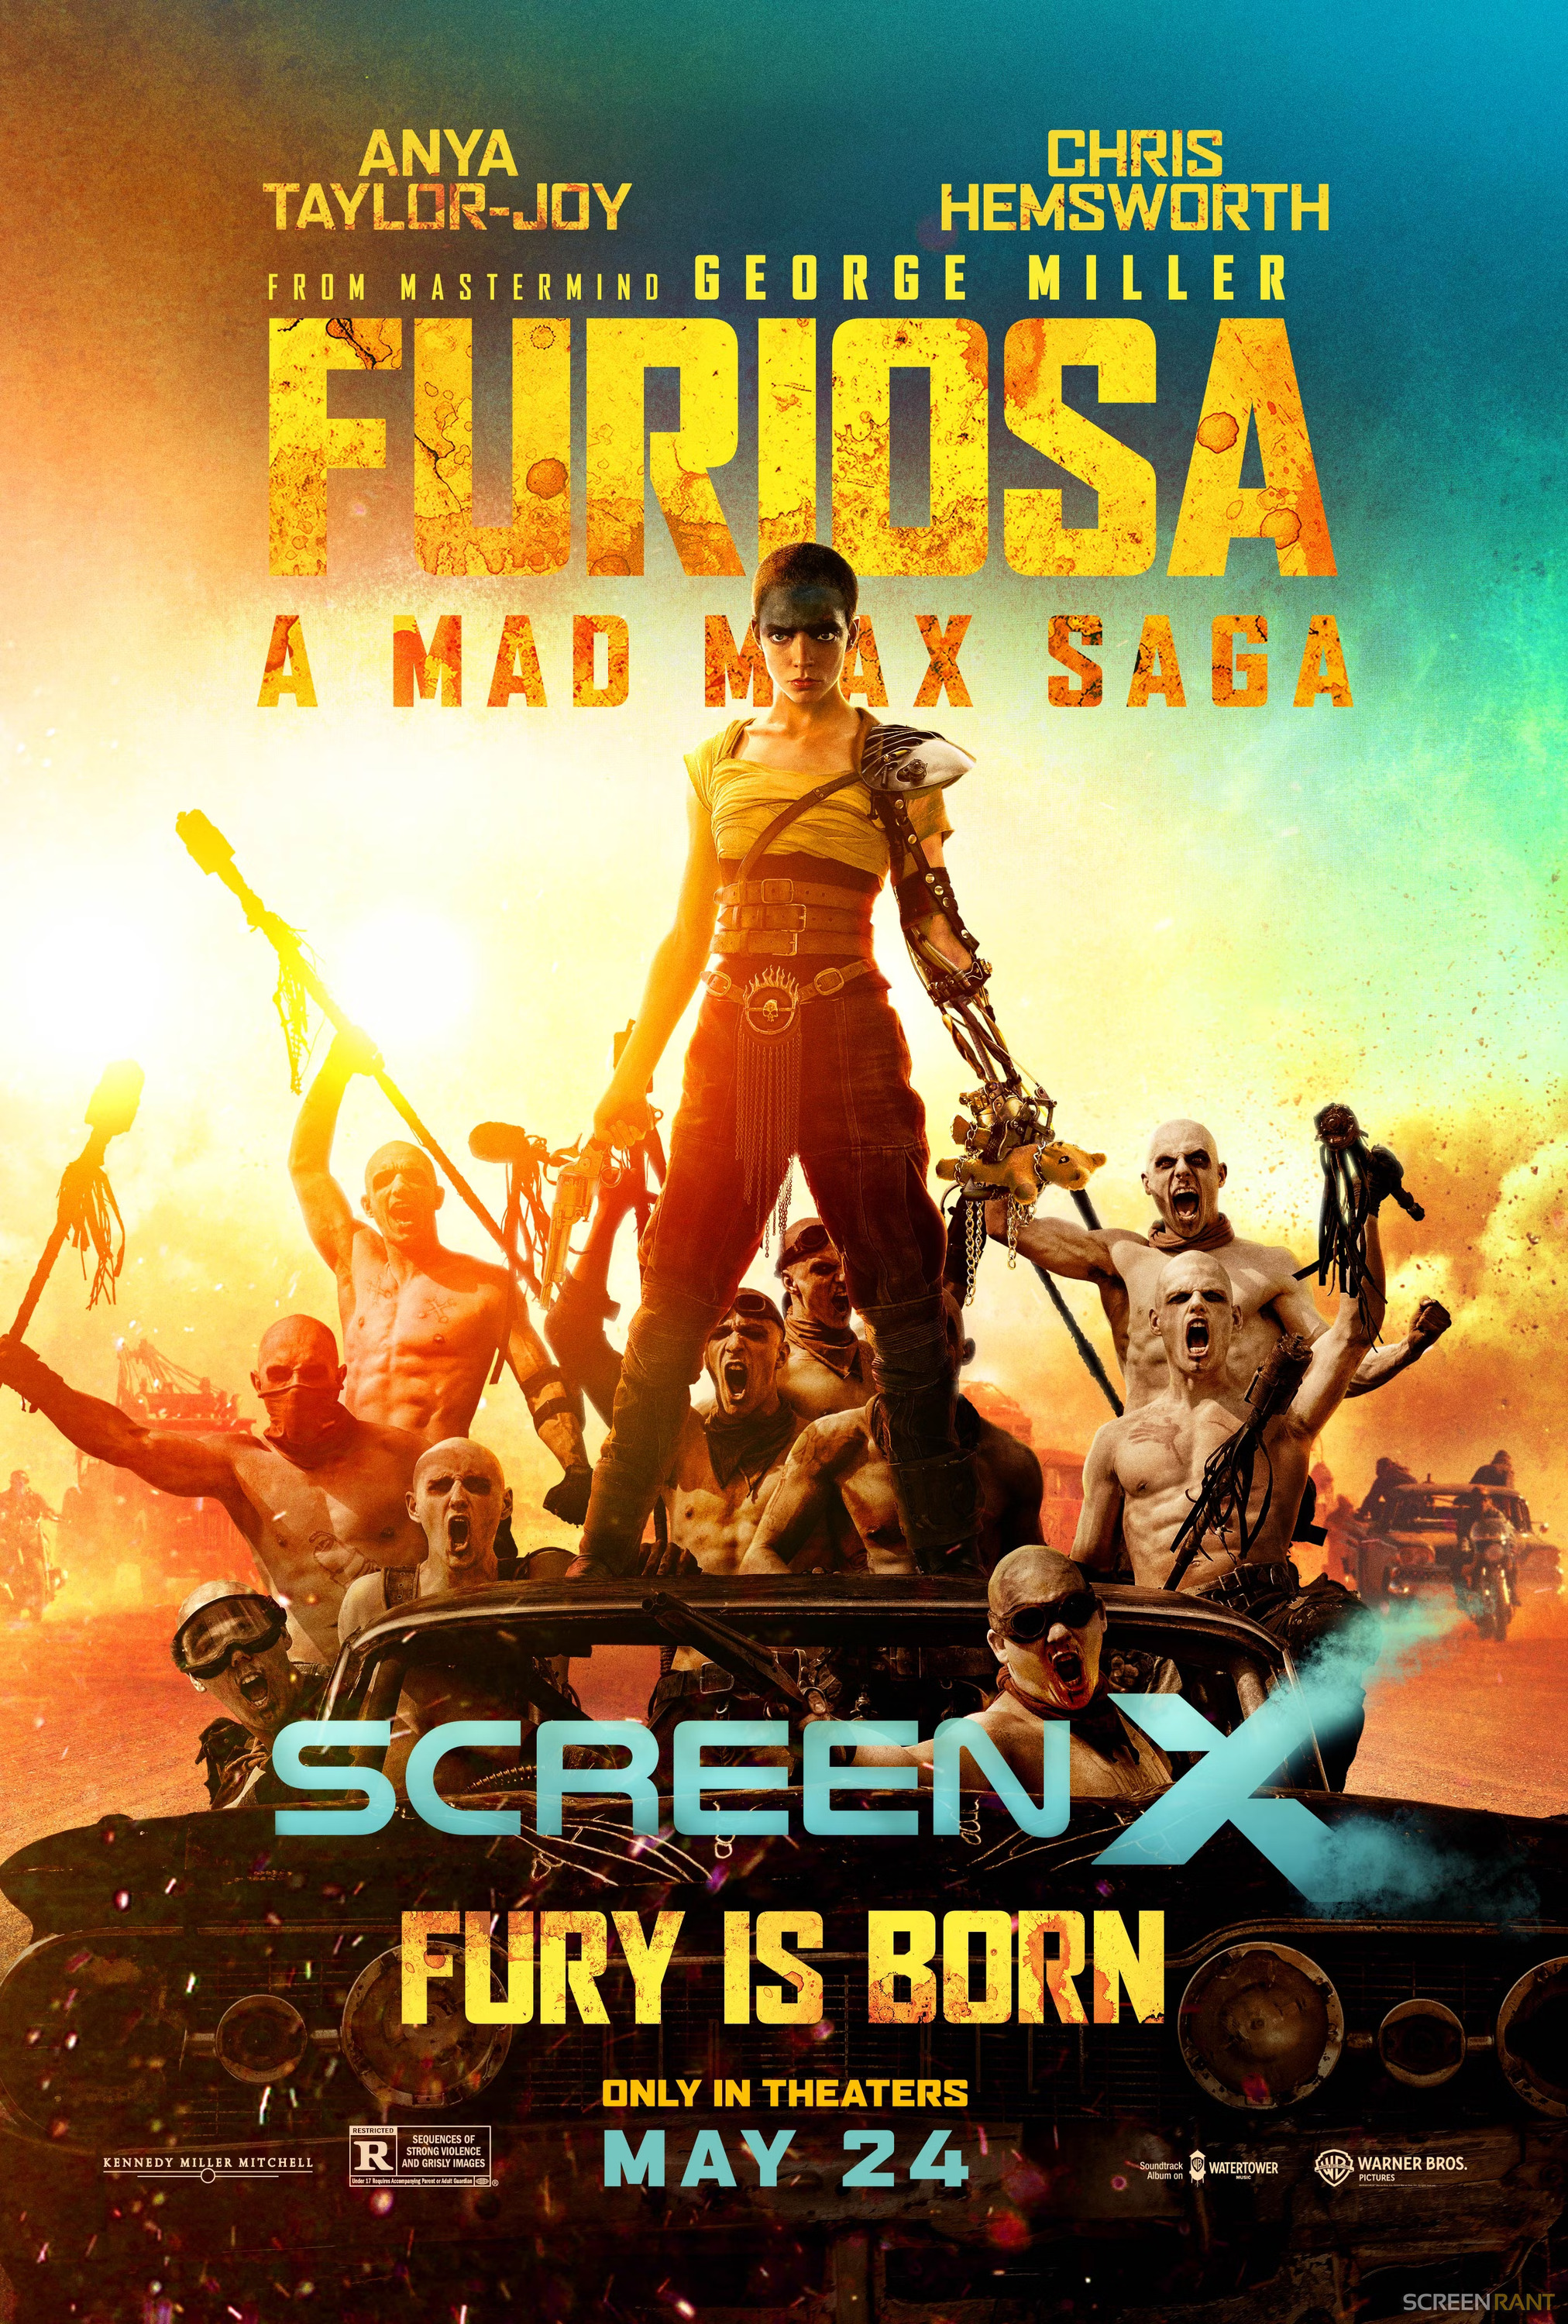 Mega Sized Movie Poster Image for Furiosa (#6 of 9)